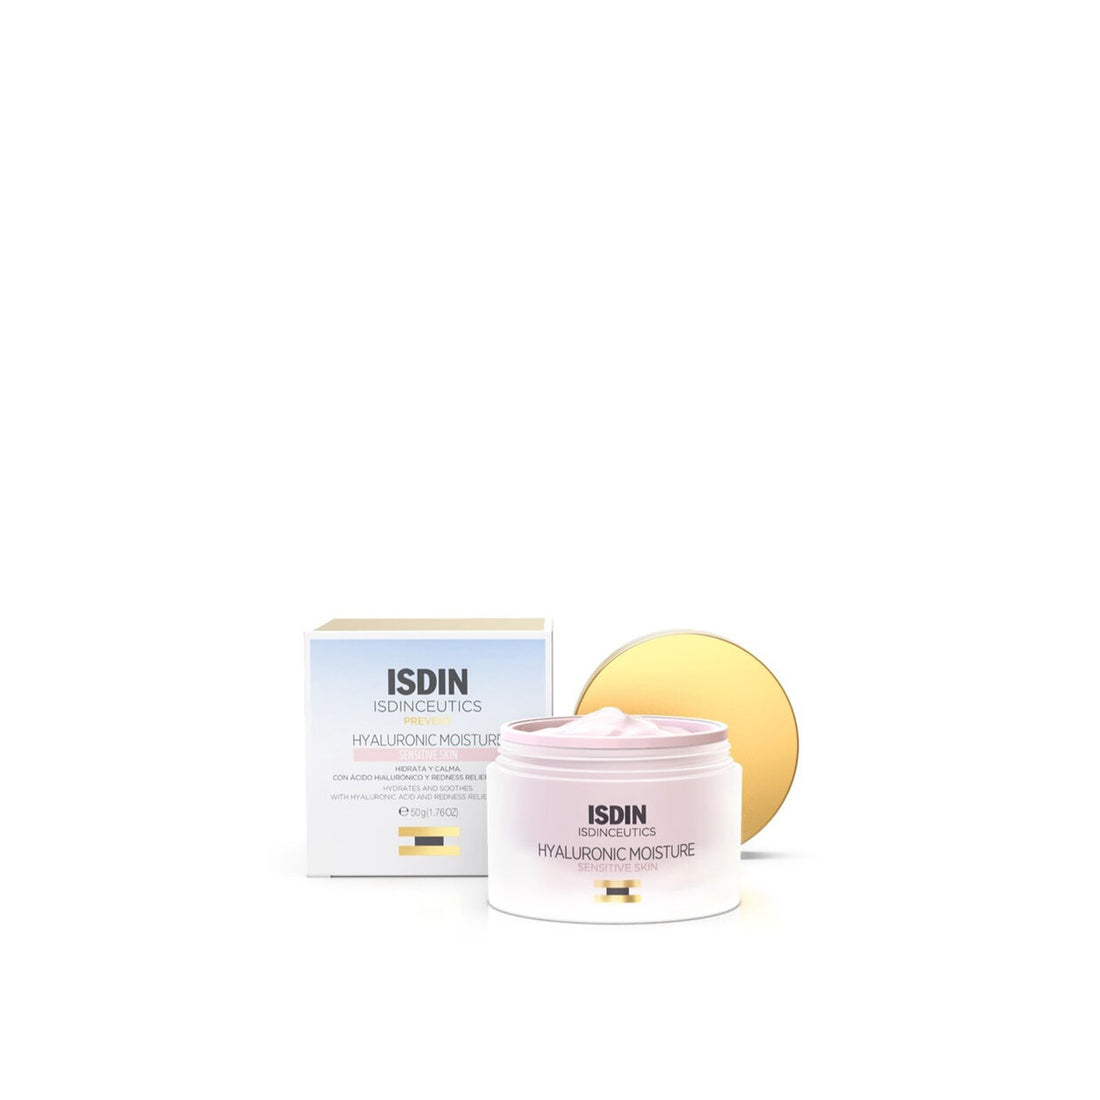 ISDIN ISDINCEUTICS Hyaluronic Moisture Cream Sensitive Skin 50g